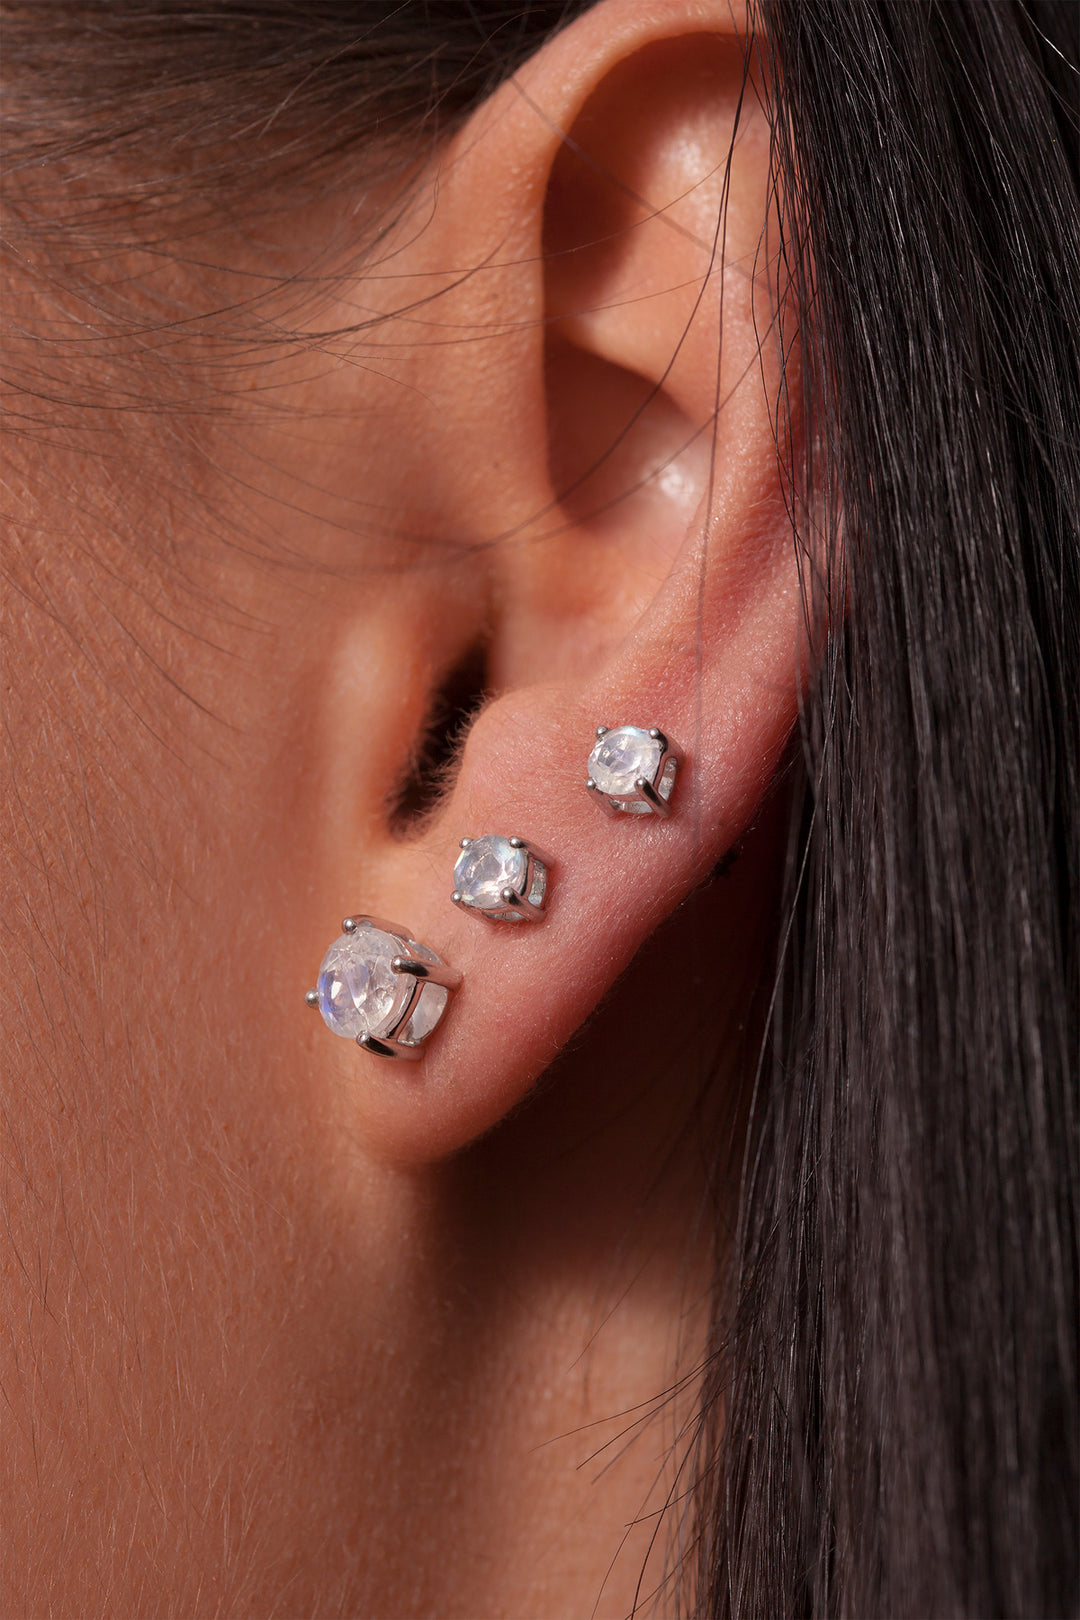 4 mm Moonstone Gold Stud Earrings